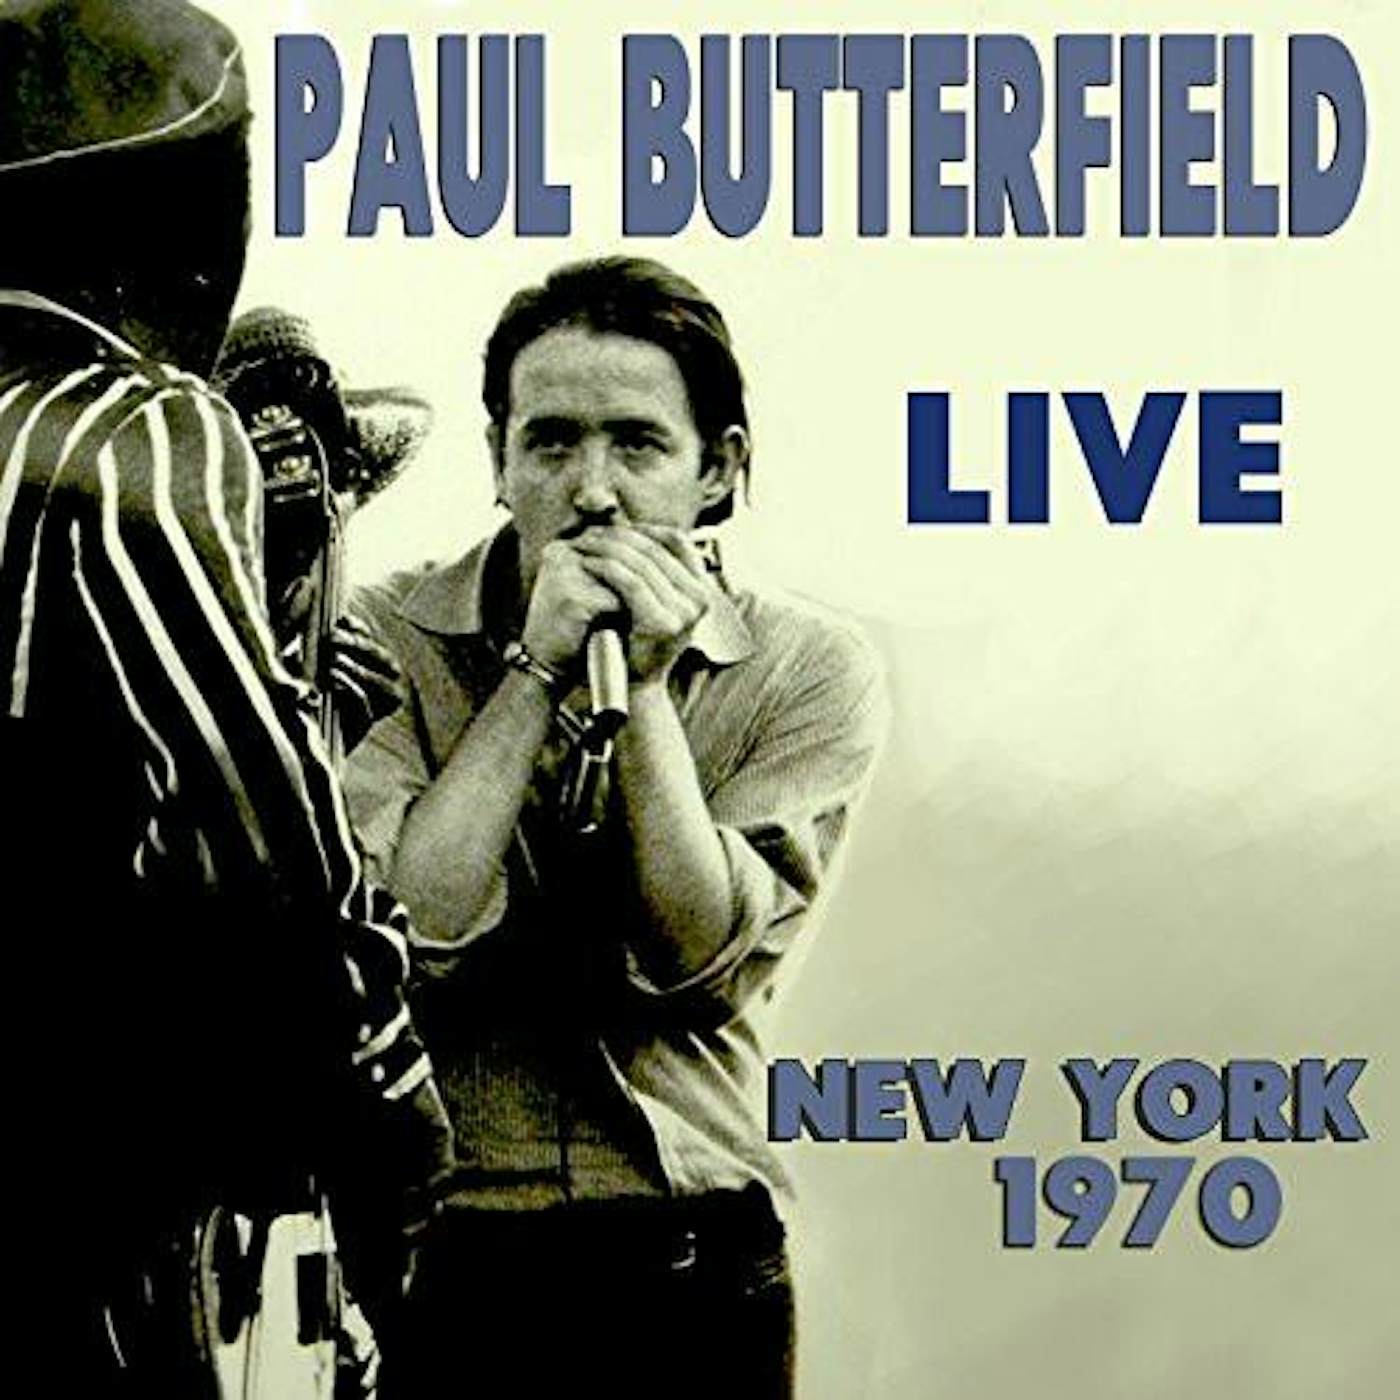 Paul Butterfield LIVE CD